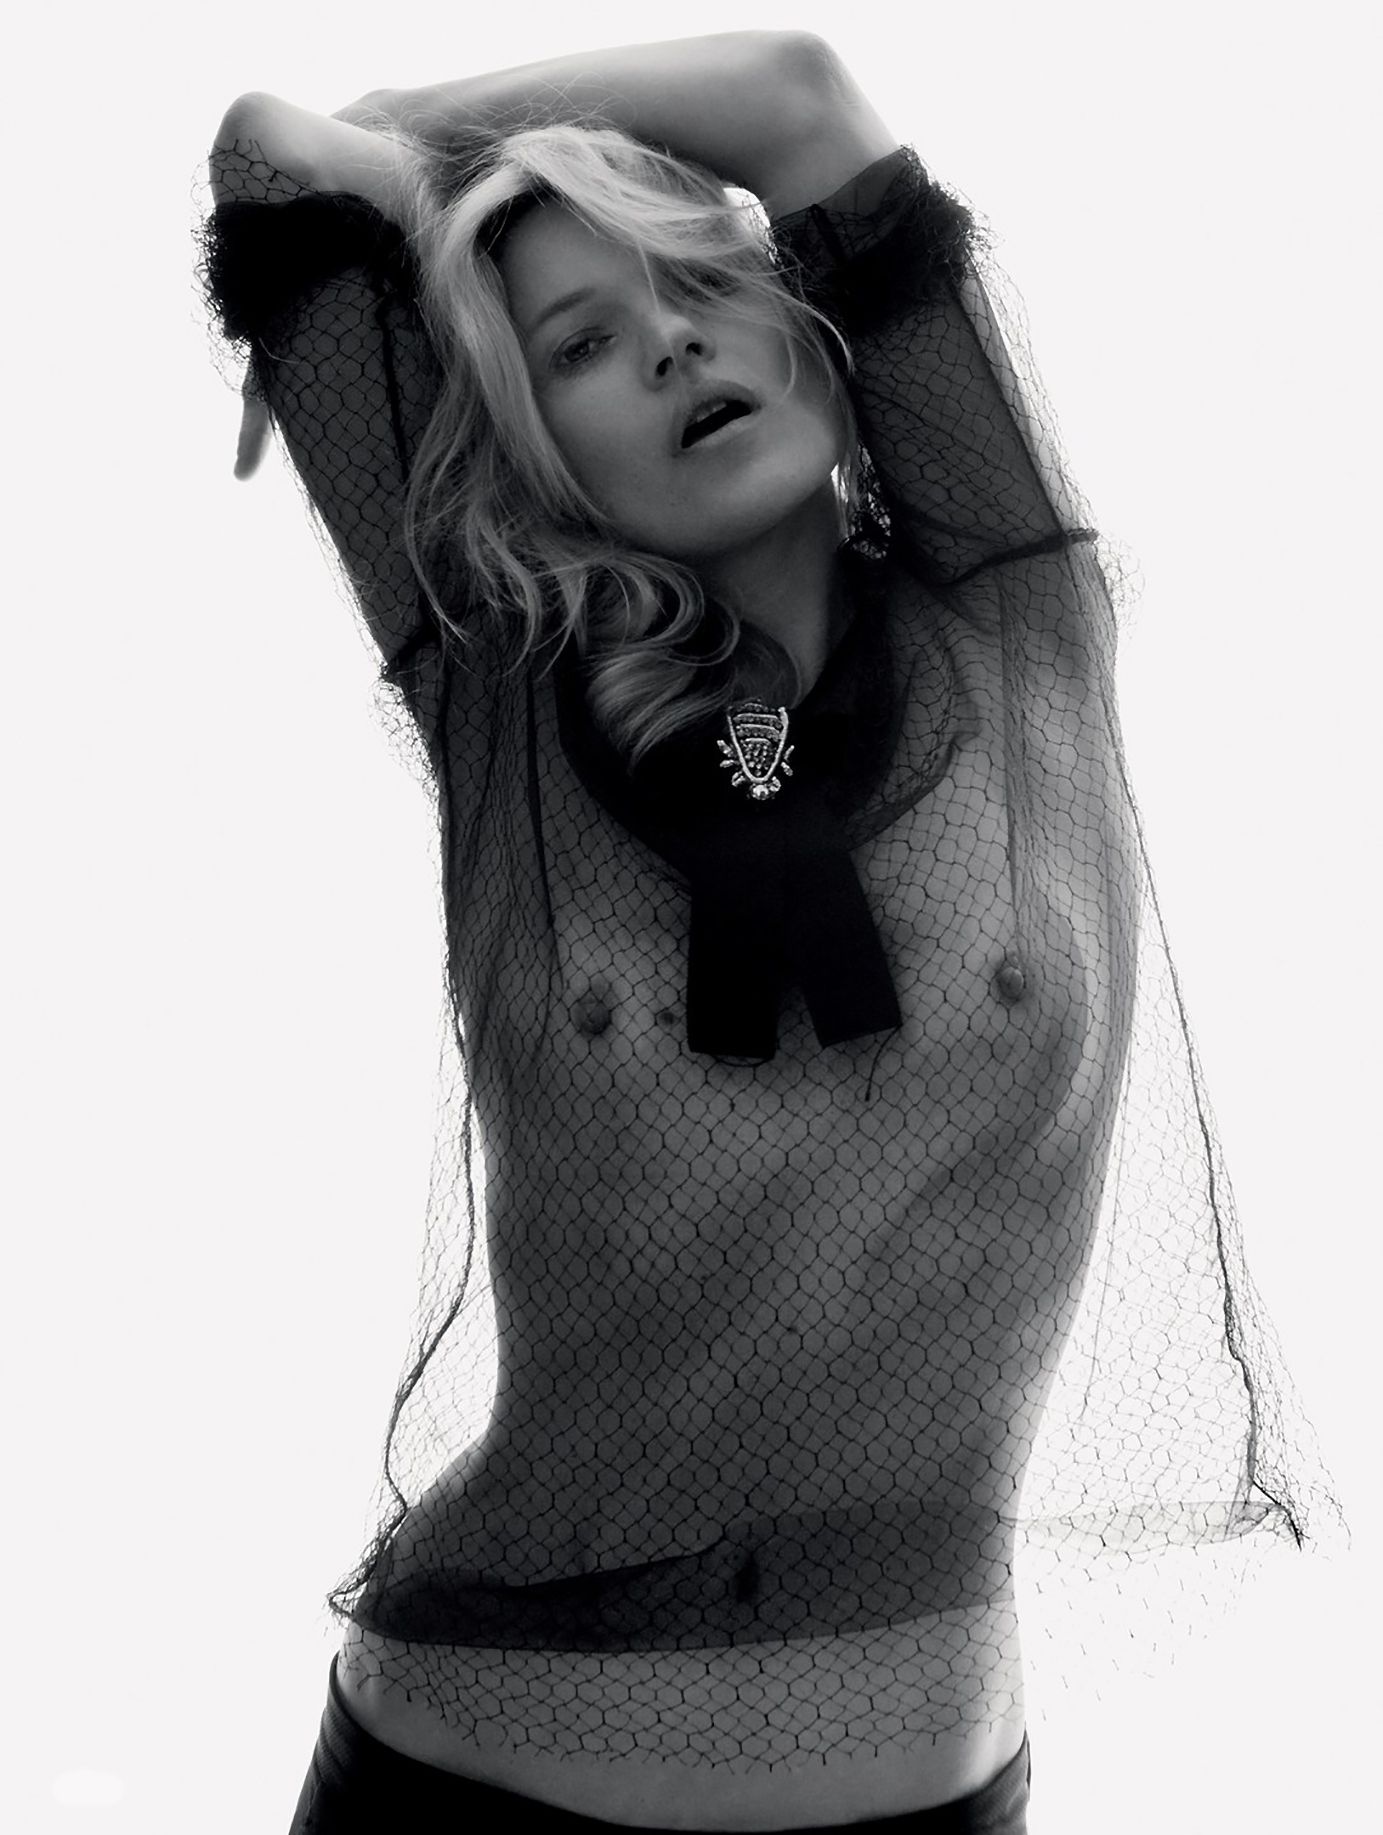 Kate Moss See Through (7 Photos)